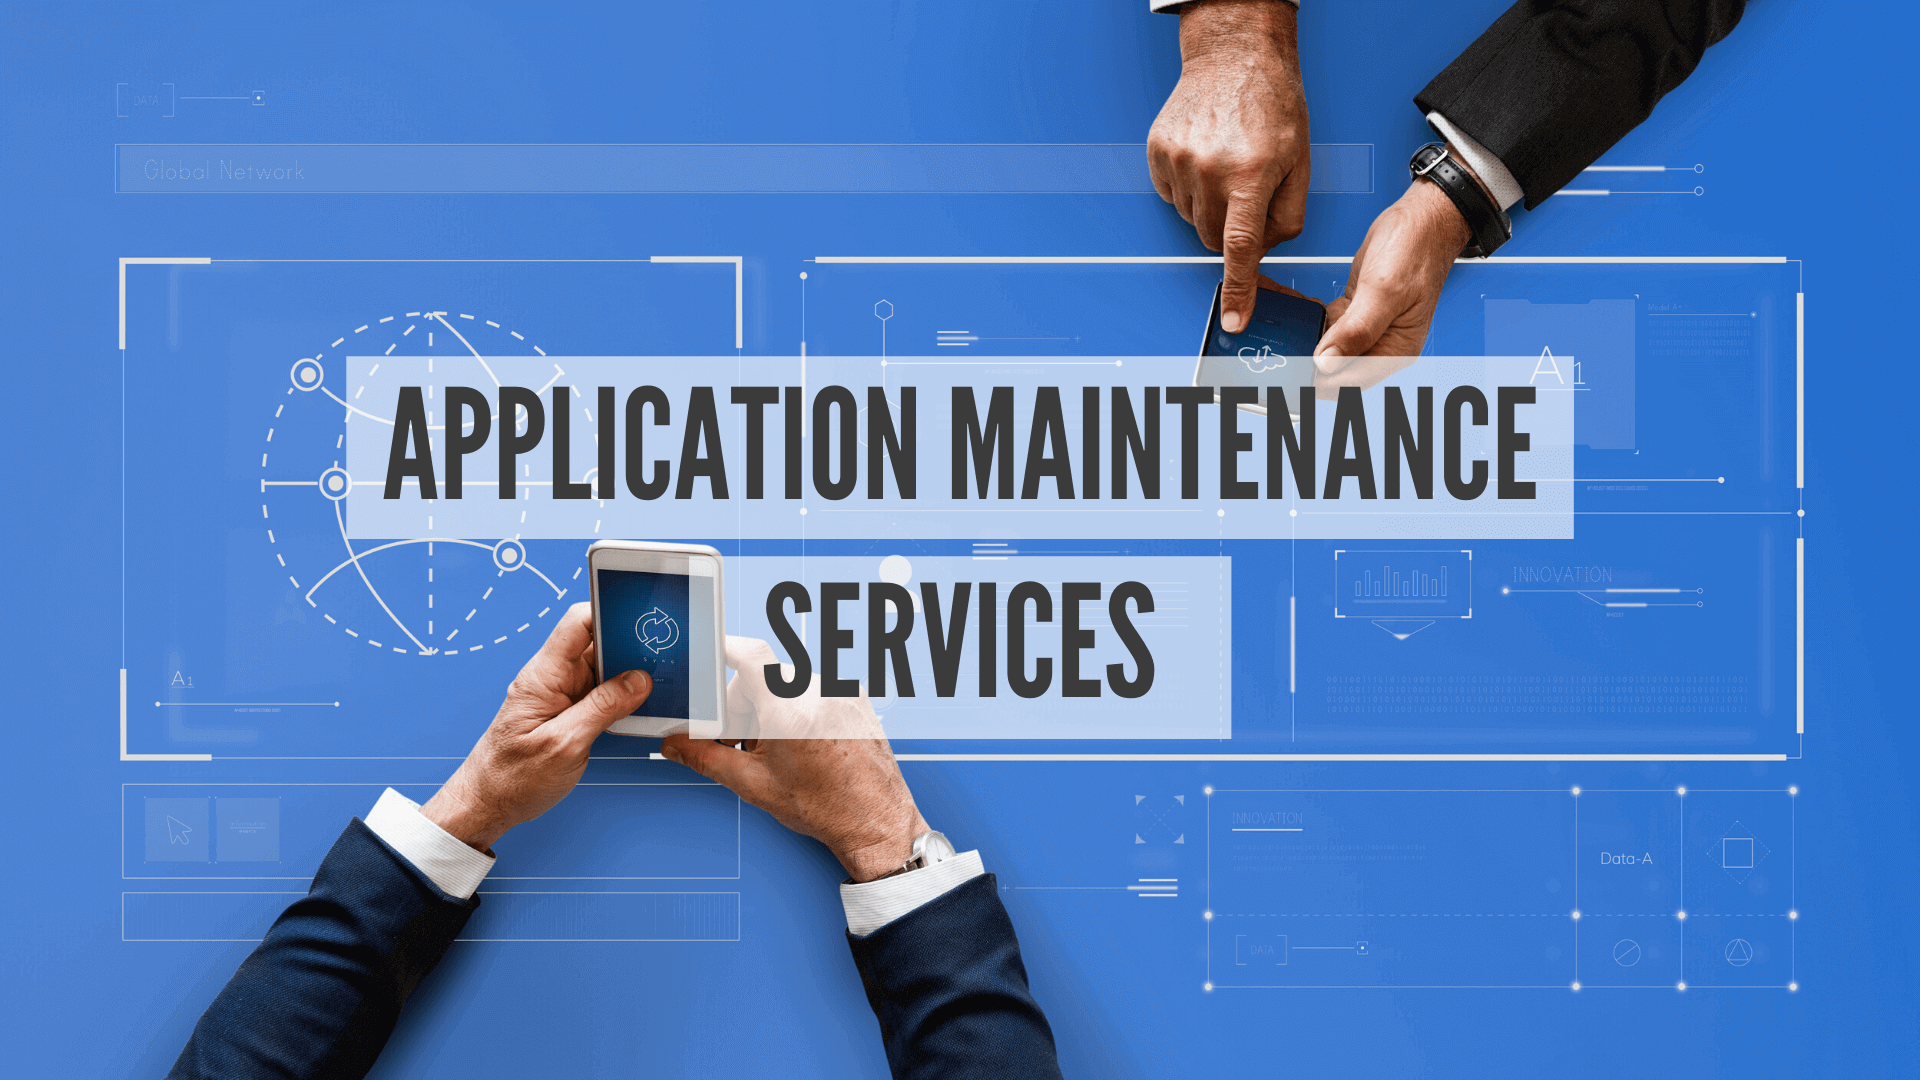 Application Maintenance Services